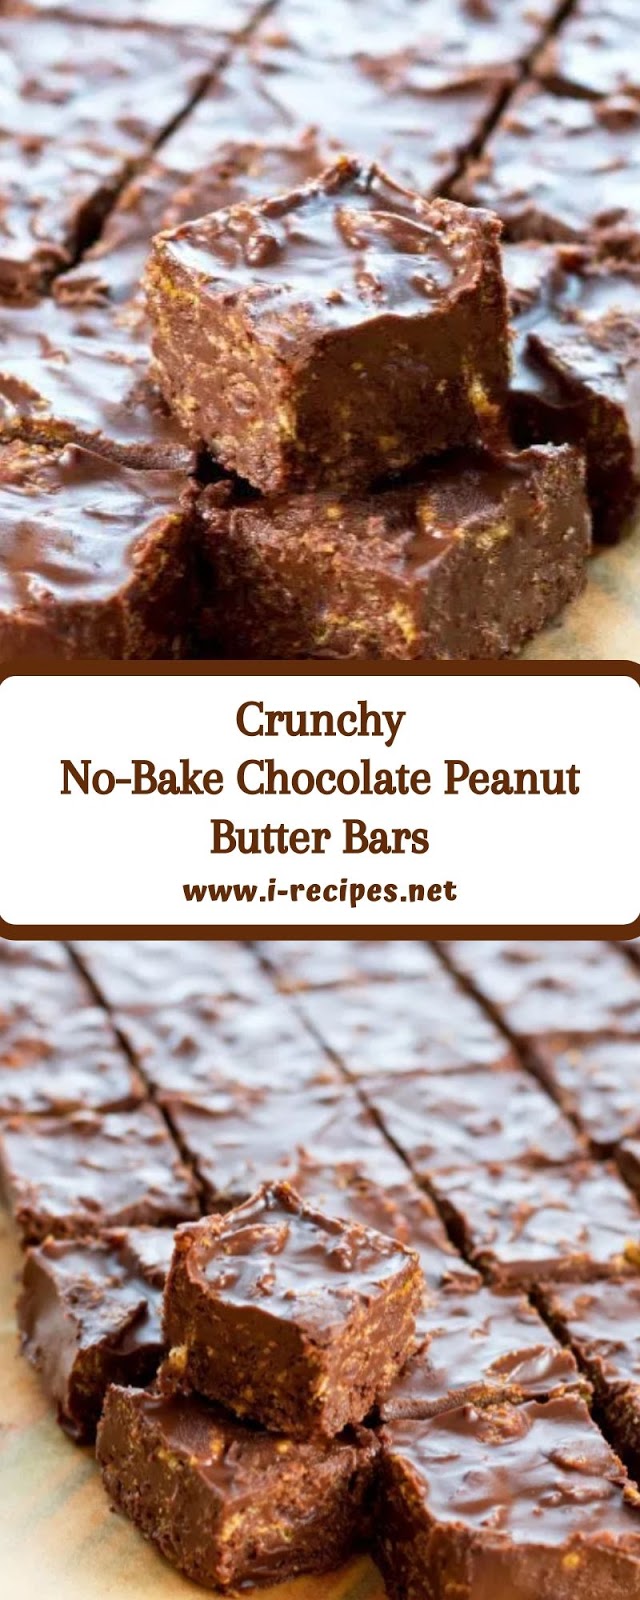 Crunchy No-Bake Chocolate Peanut Butter Bars